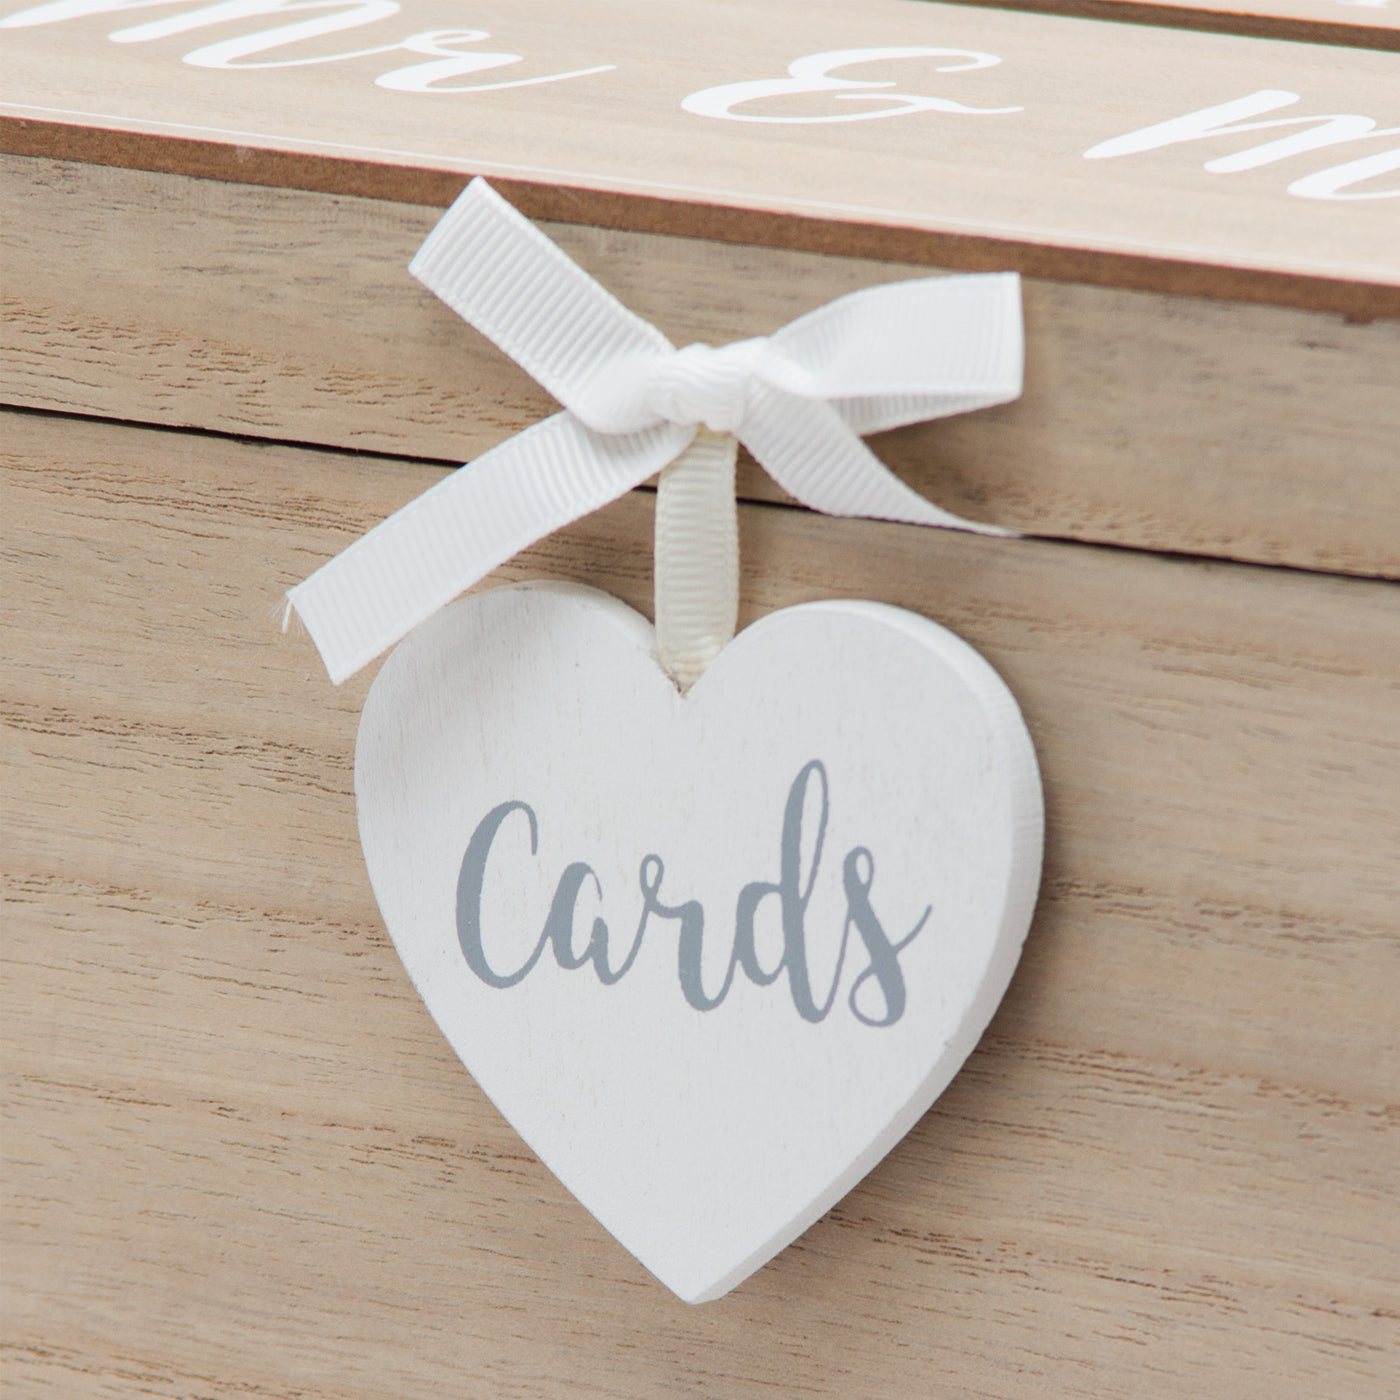 Cute Card Box For wedding Cards